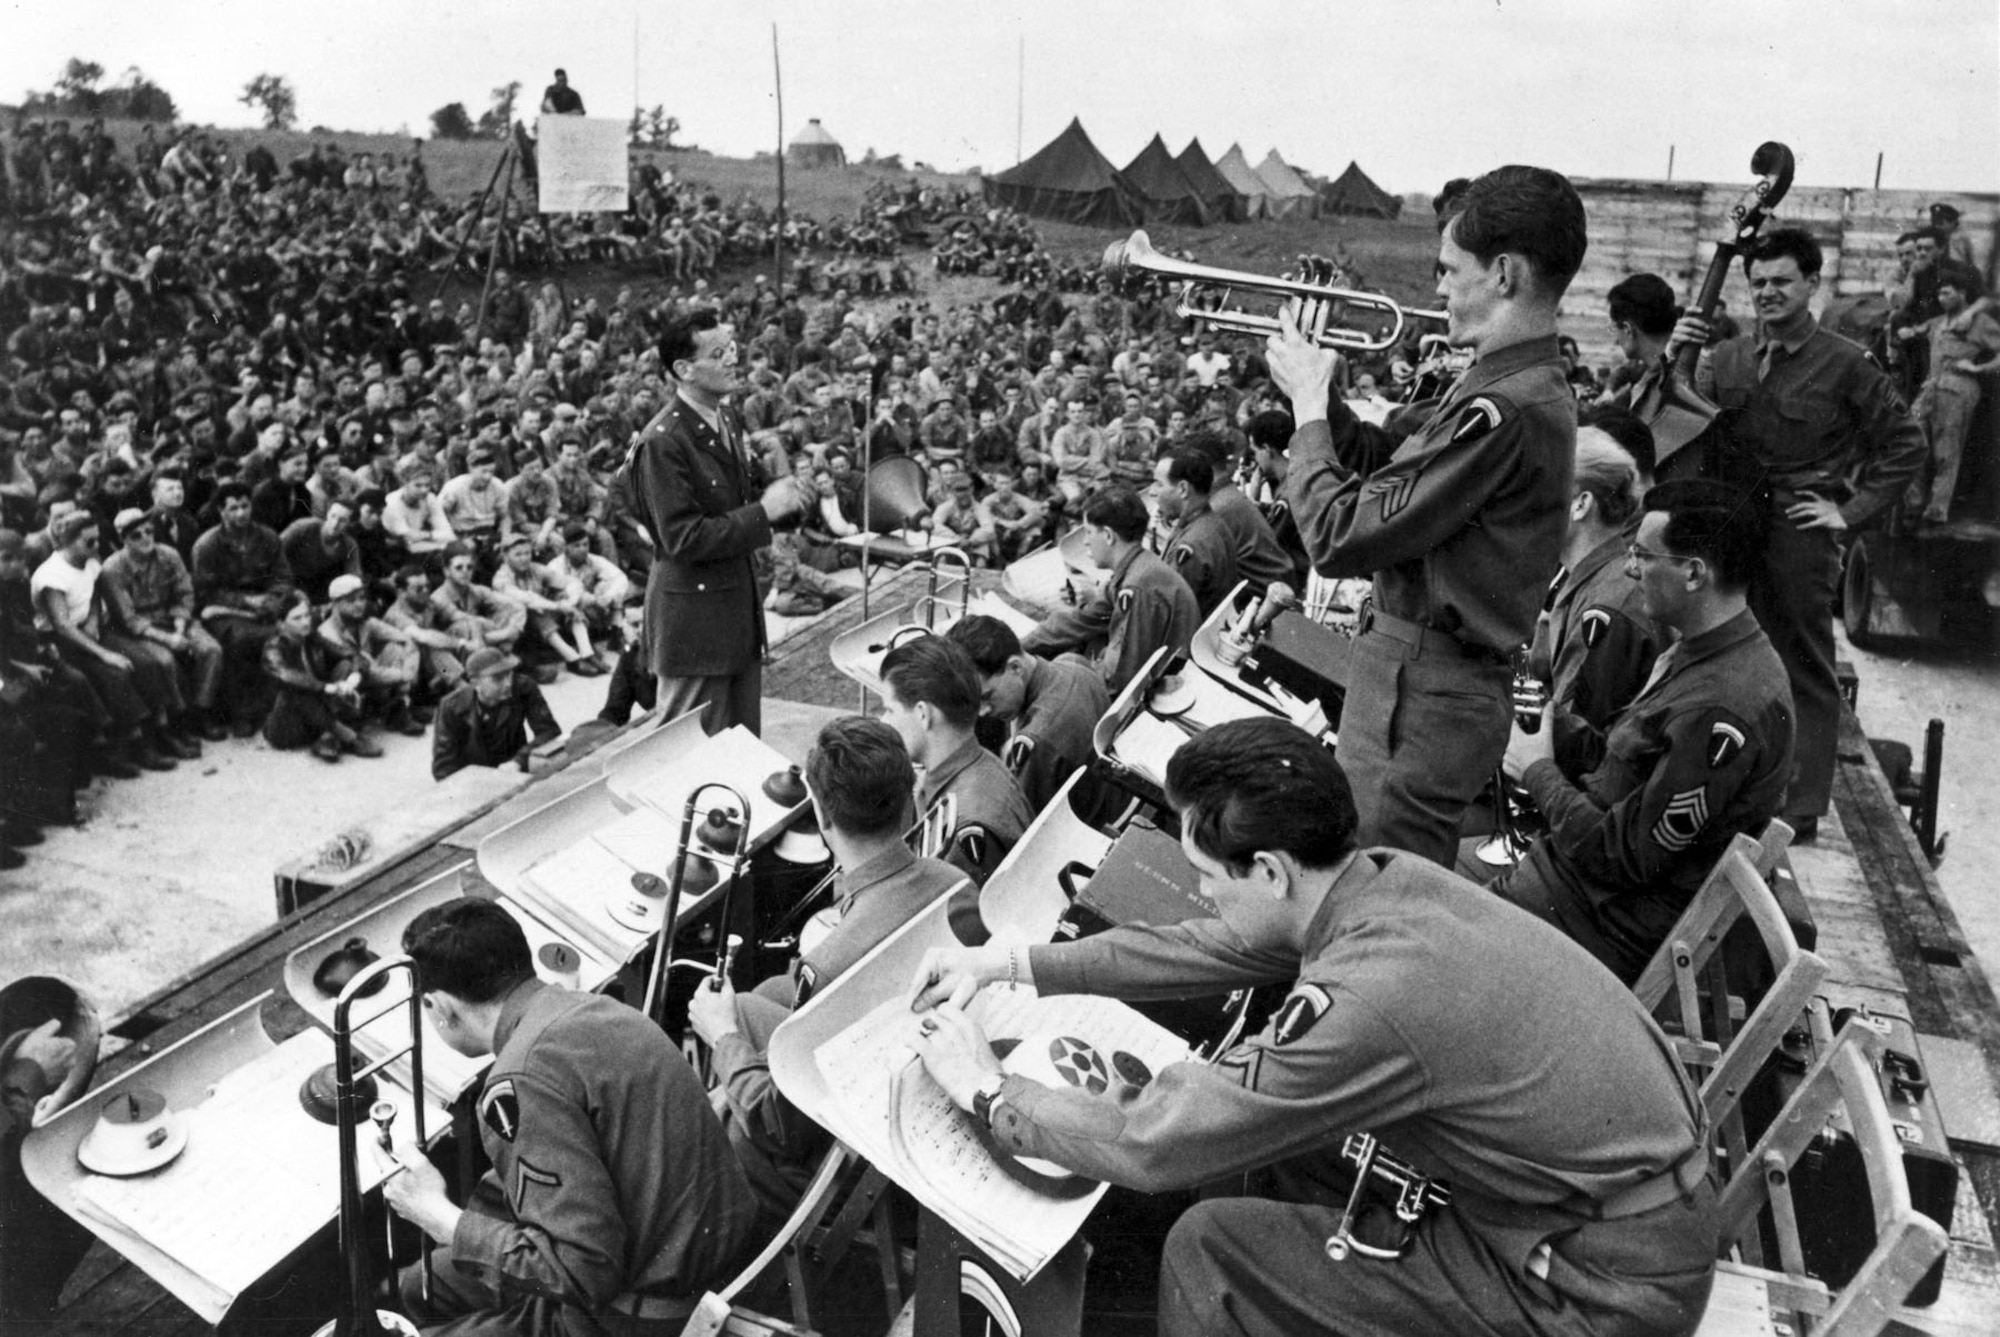 Maj. Glenn Miller conducts the band during an open air concert. (U.S. Air Force photo)